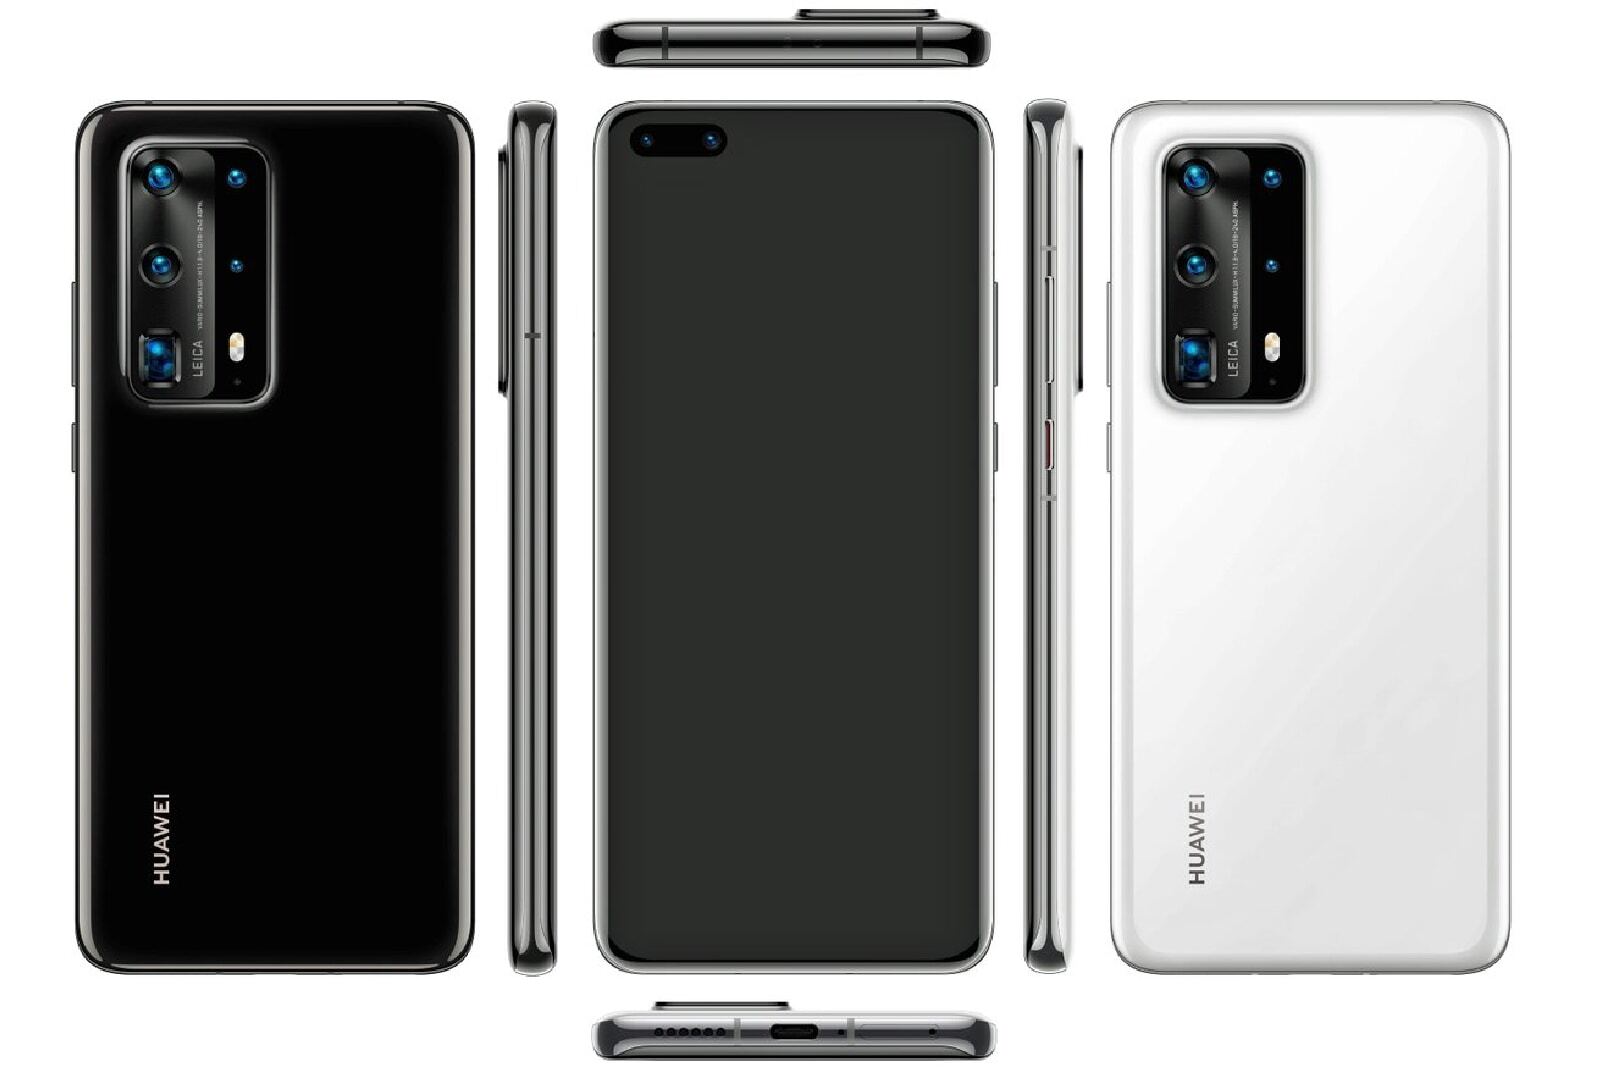  Huawei P40 Pro Premium Edition - Premium Huawei P40 Pro variant leaks with five cameras, ceramic back